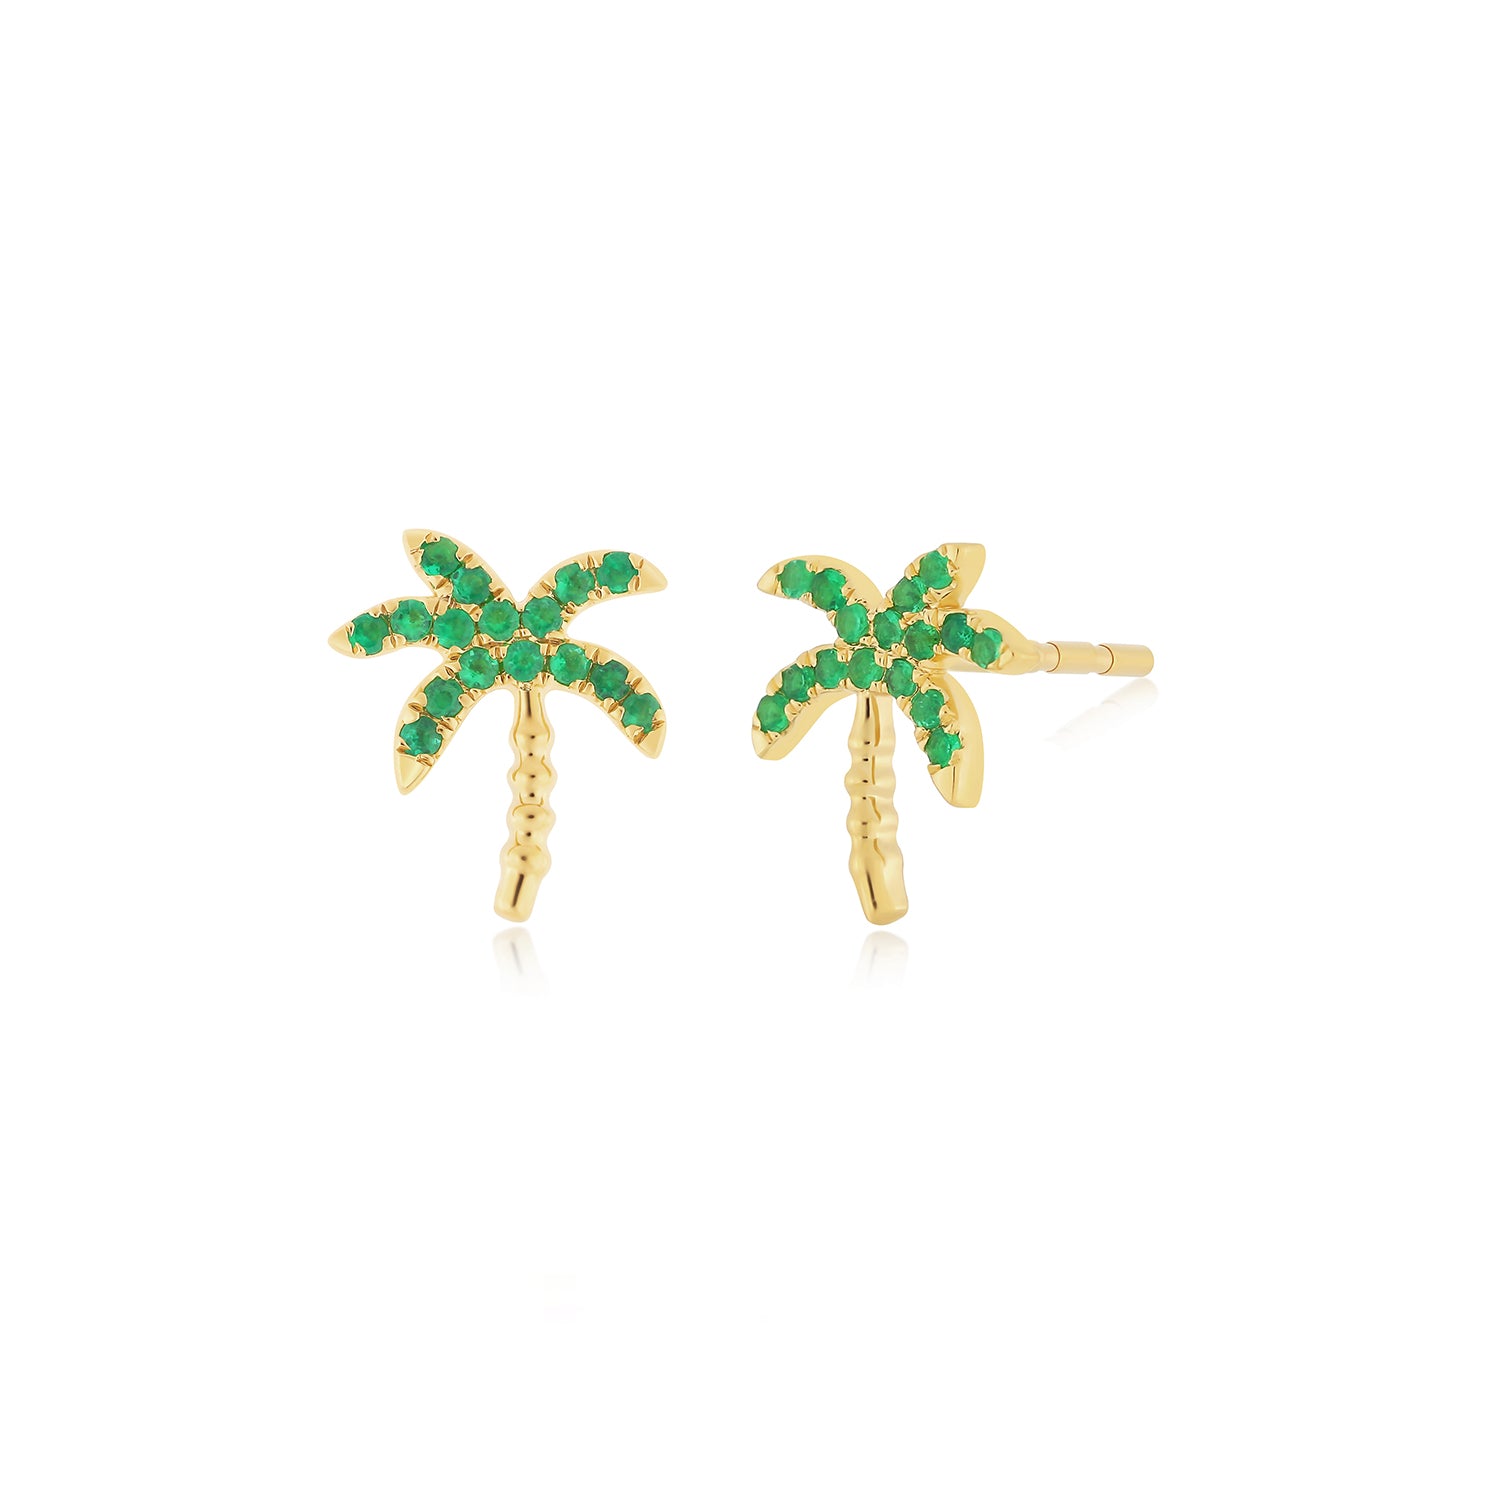 Emerald Wild Palm Stud Earring in 14k yellow gold